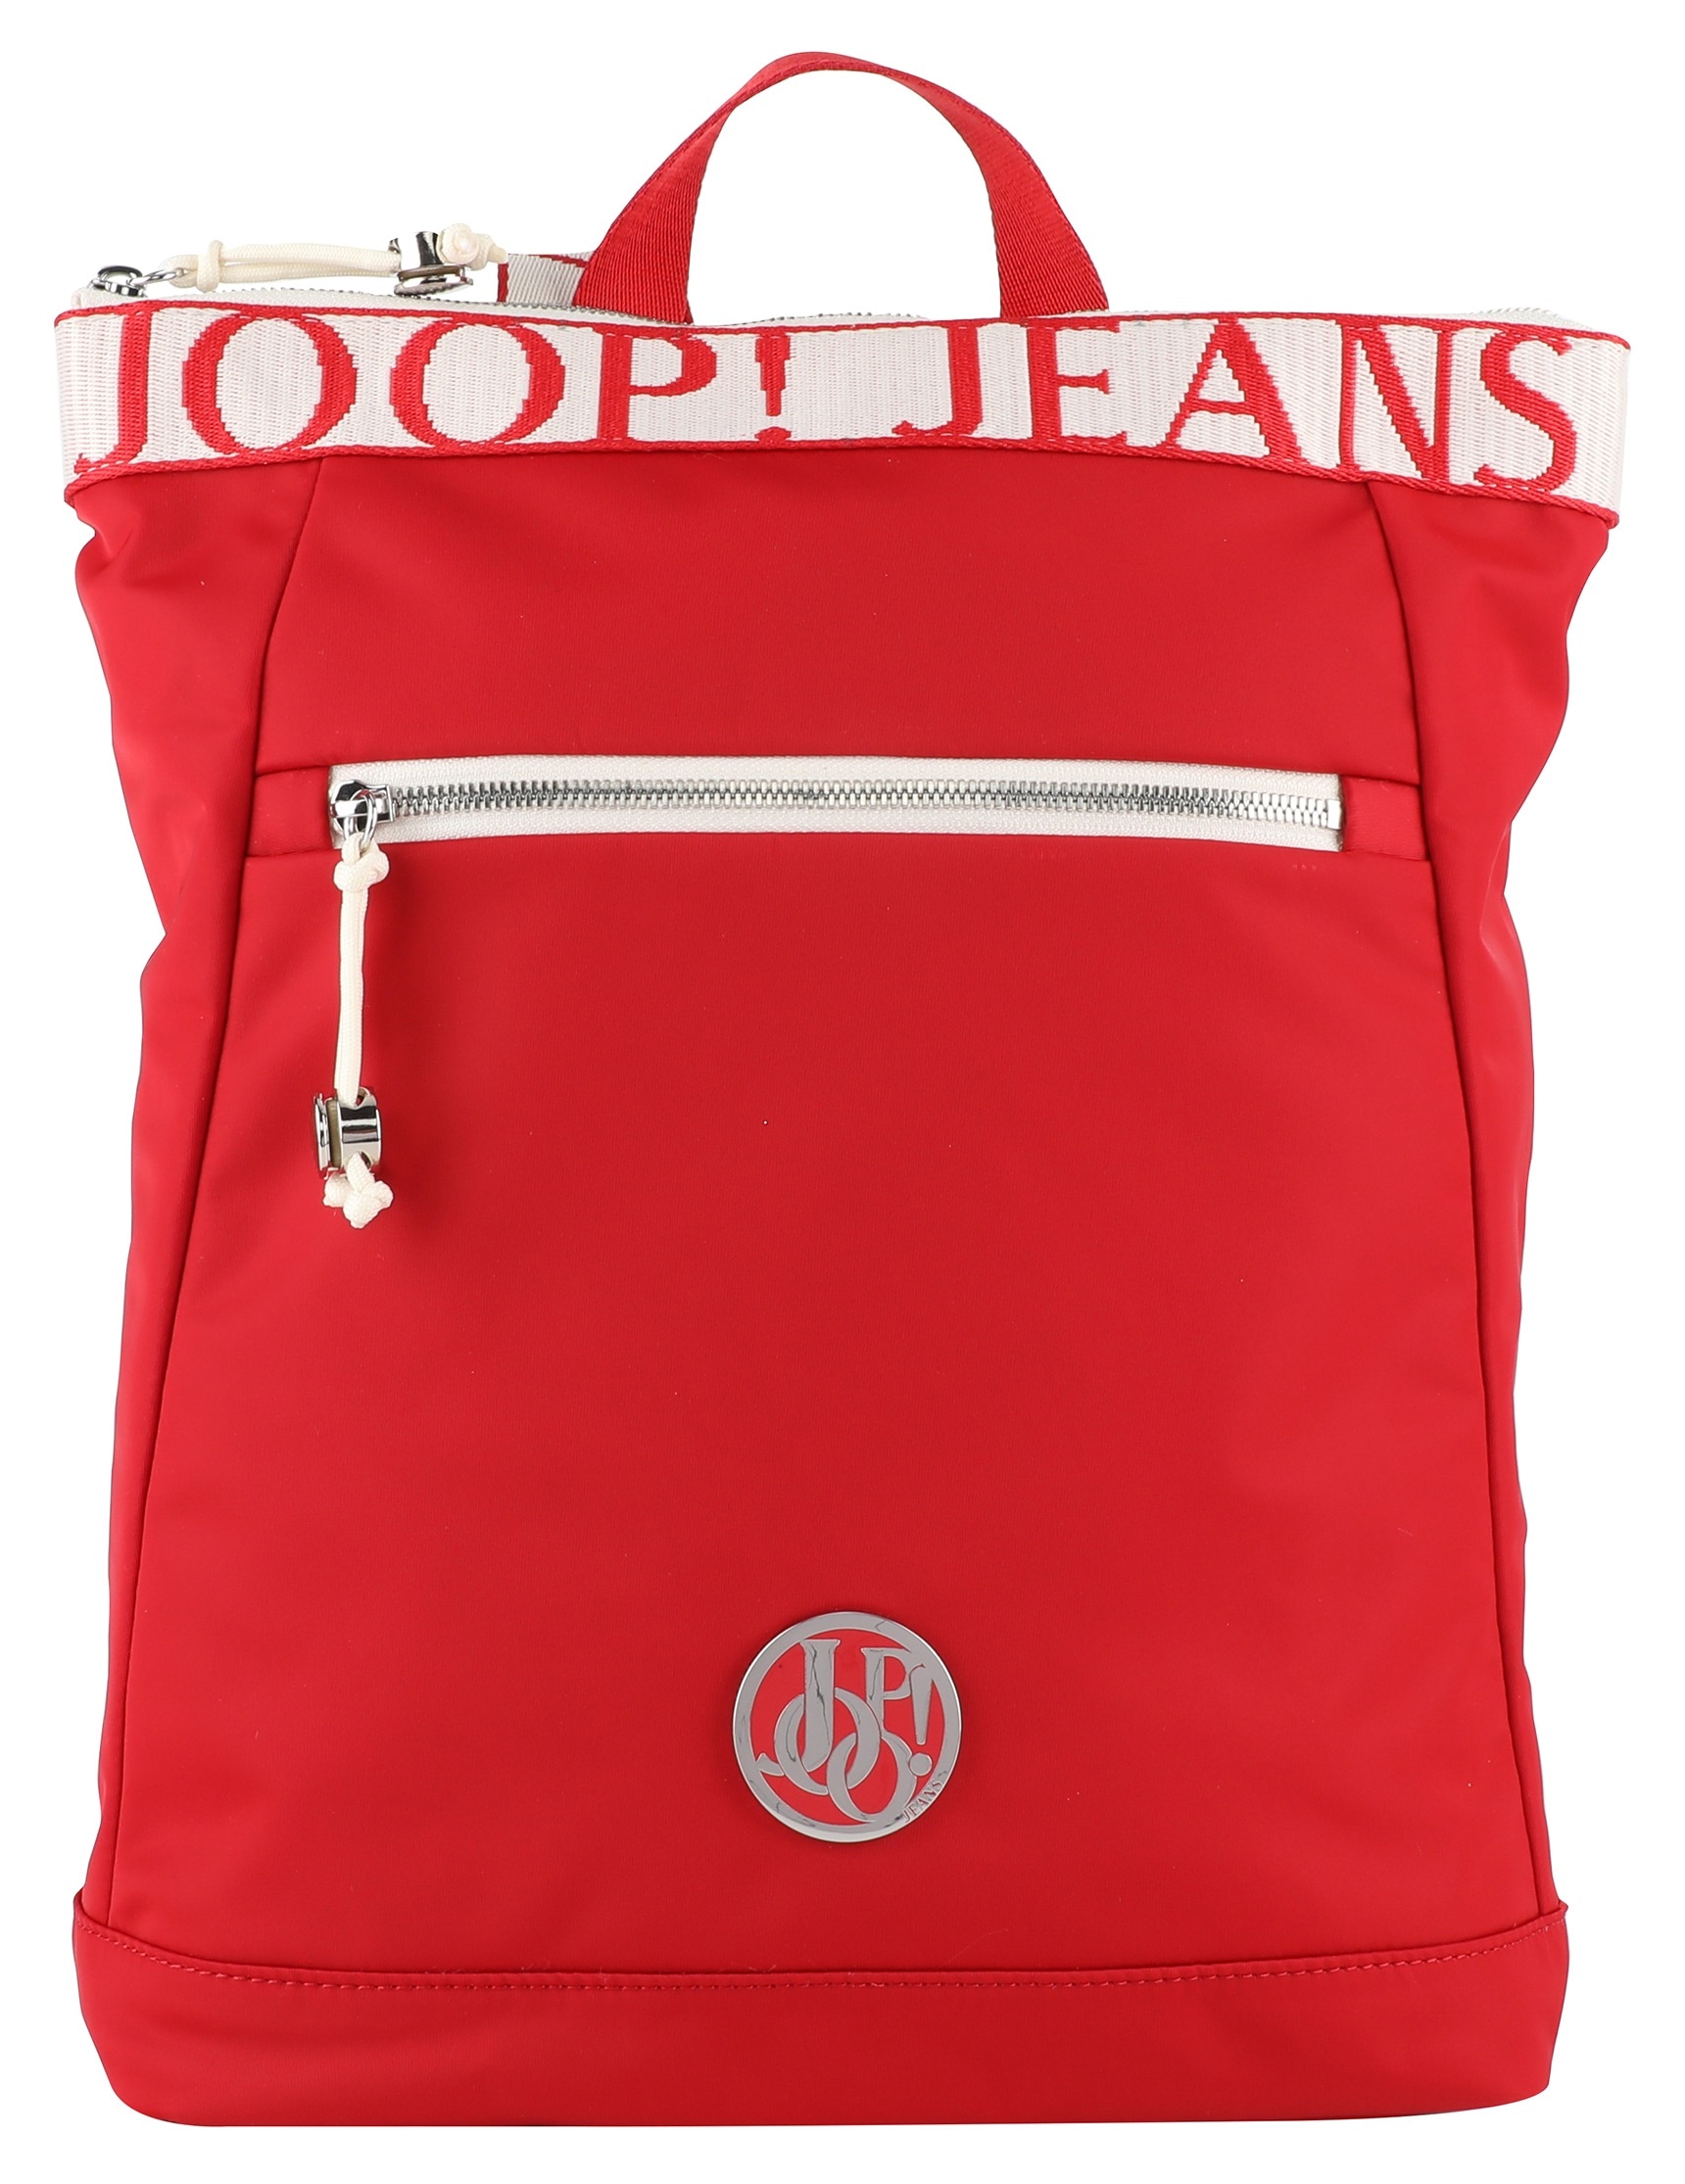 Joop Jeans Cityrucksack »lietissimo elva backpack lvz«, mit Logo Schriftzug auf den Trageriemen von Joop Jeans